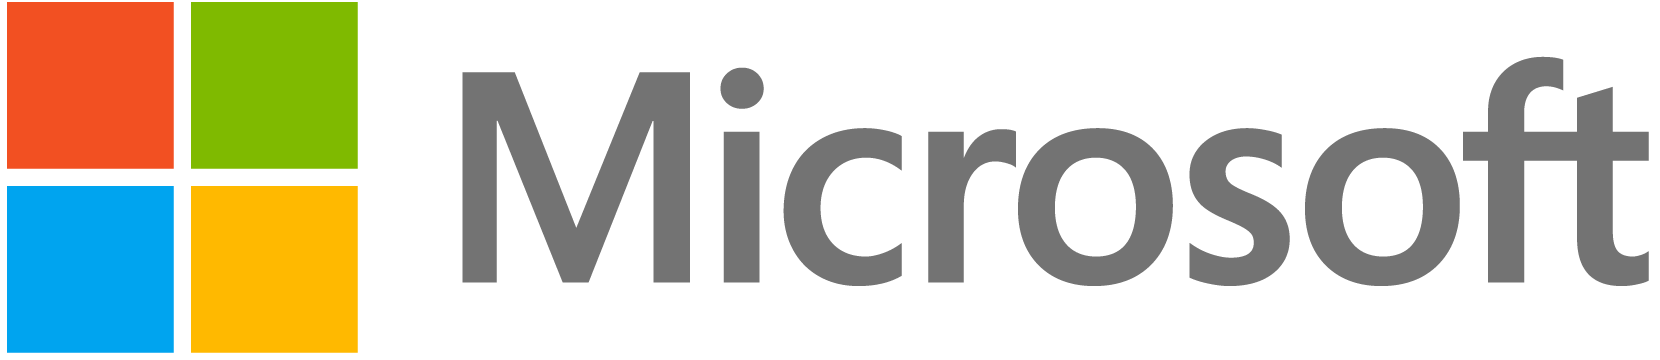 Microfost logo